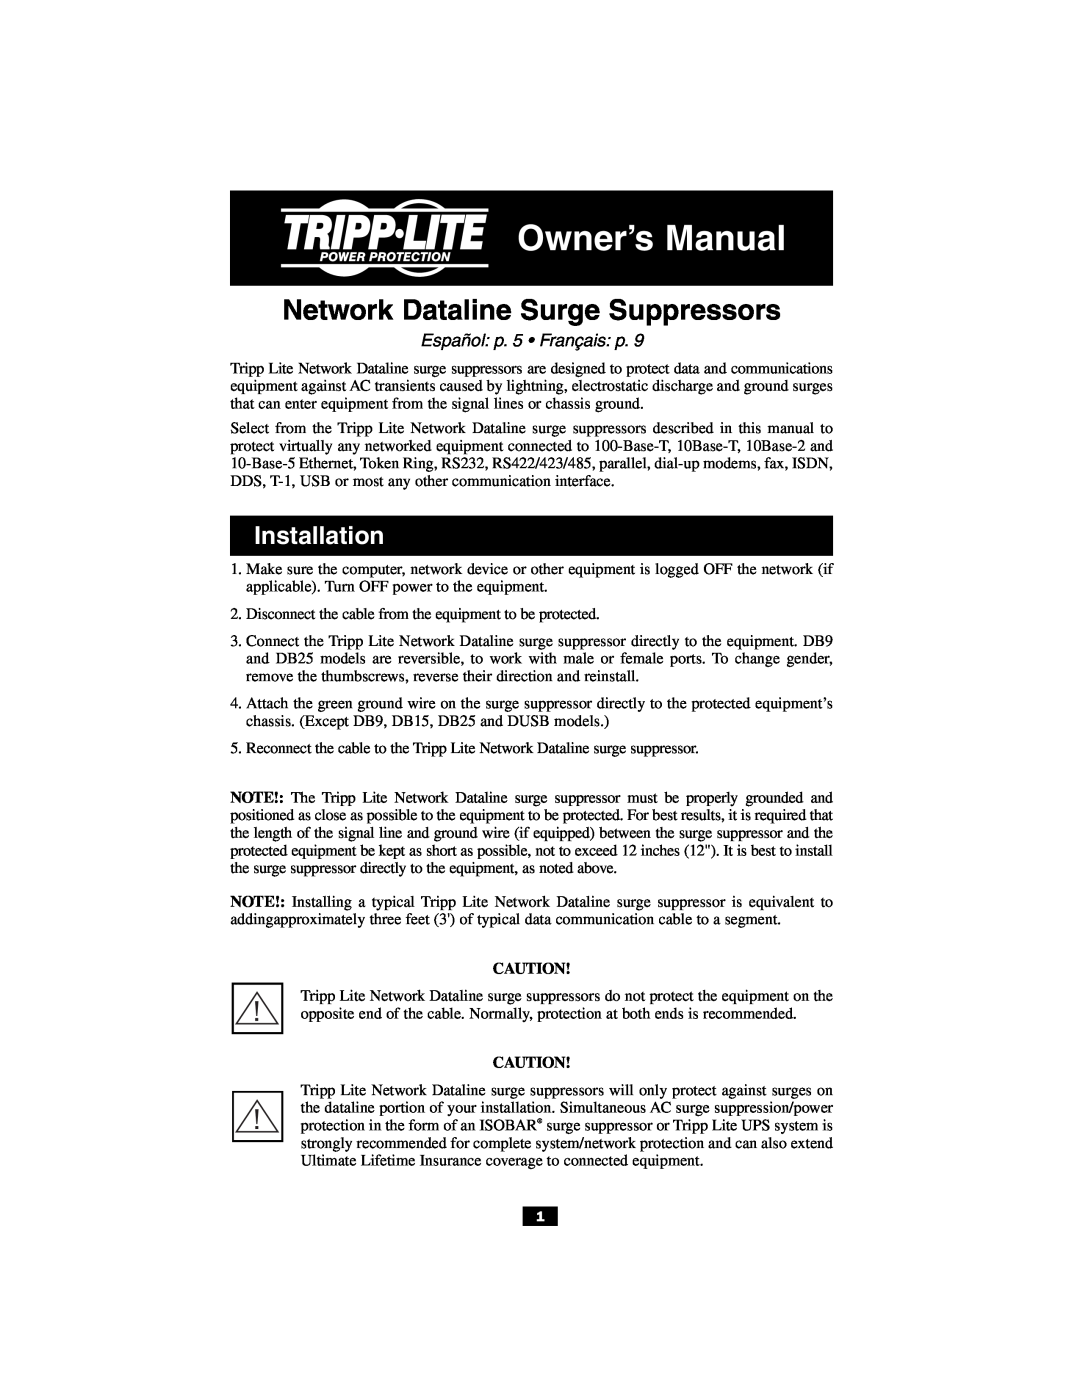 Tripp Lite DHUB-18V DHUB, DUSB, DB15 owner manual Owner’s Manual, Network Dataline Surge Suppressors, Installation 